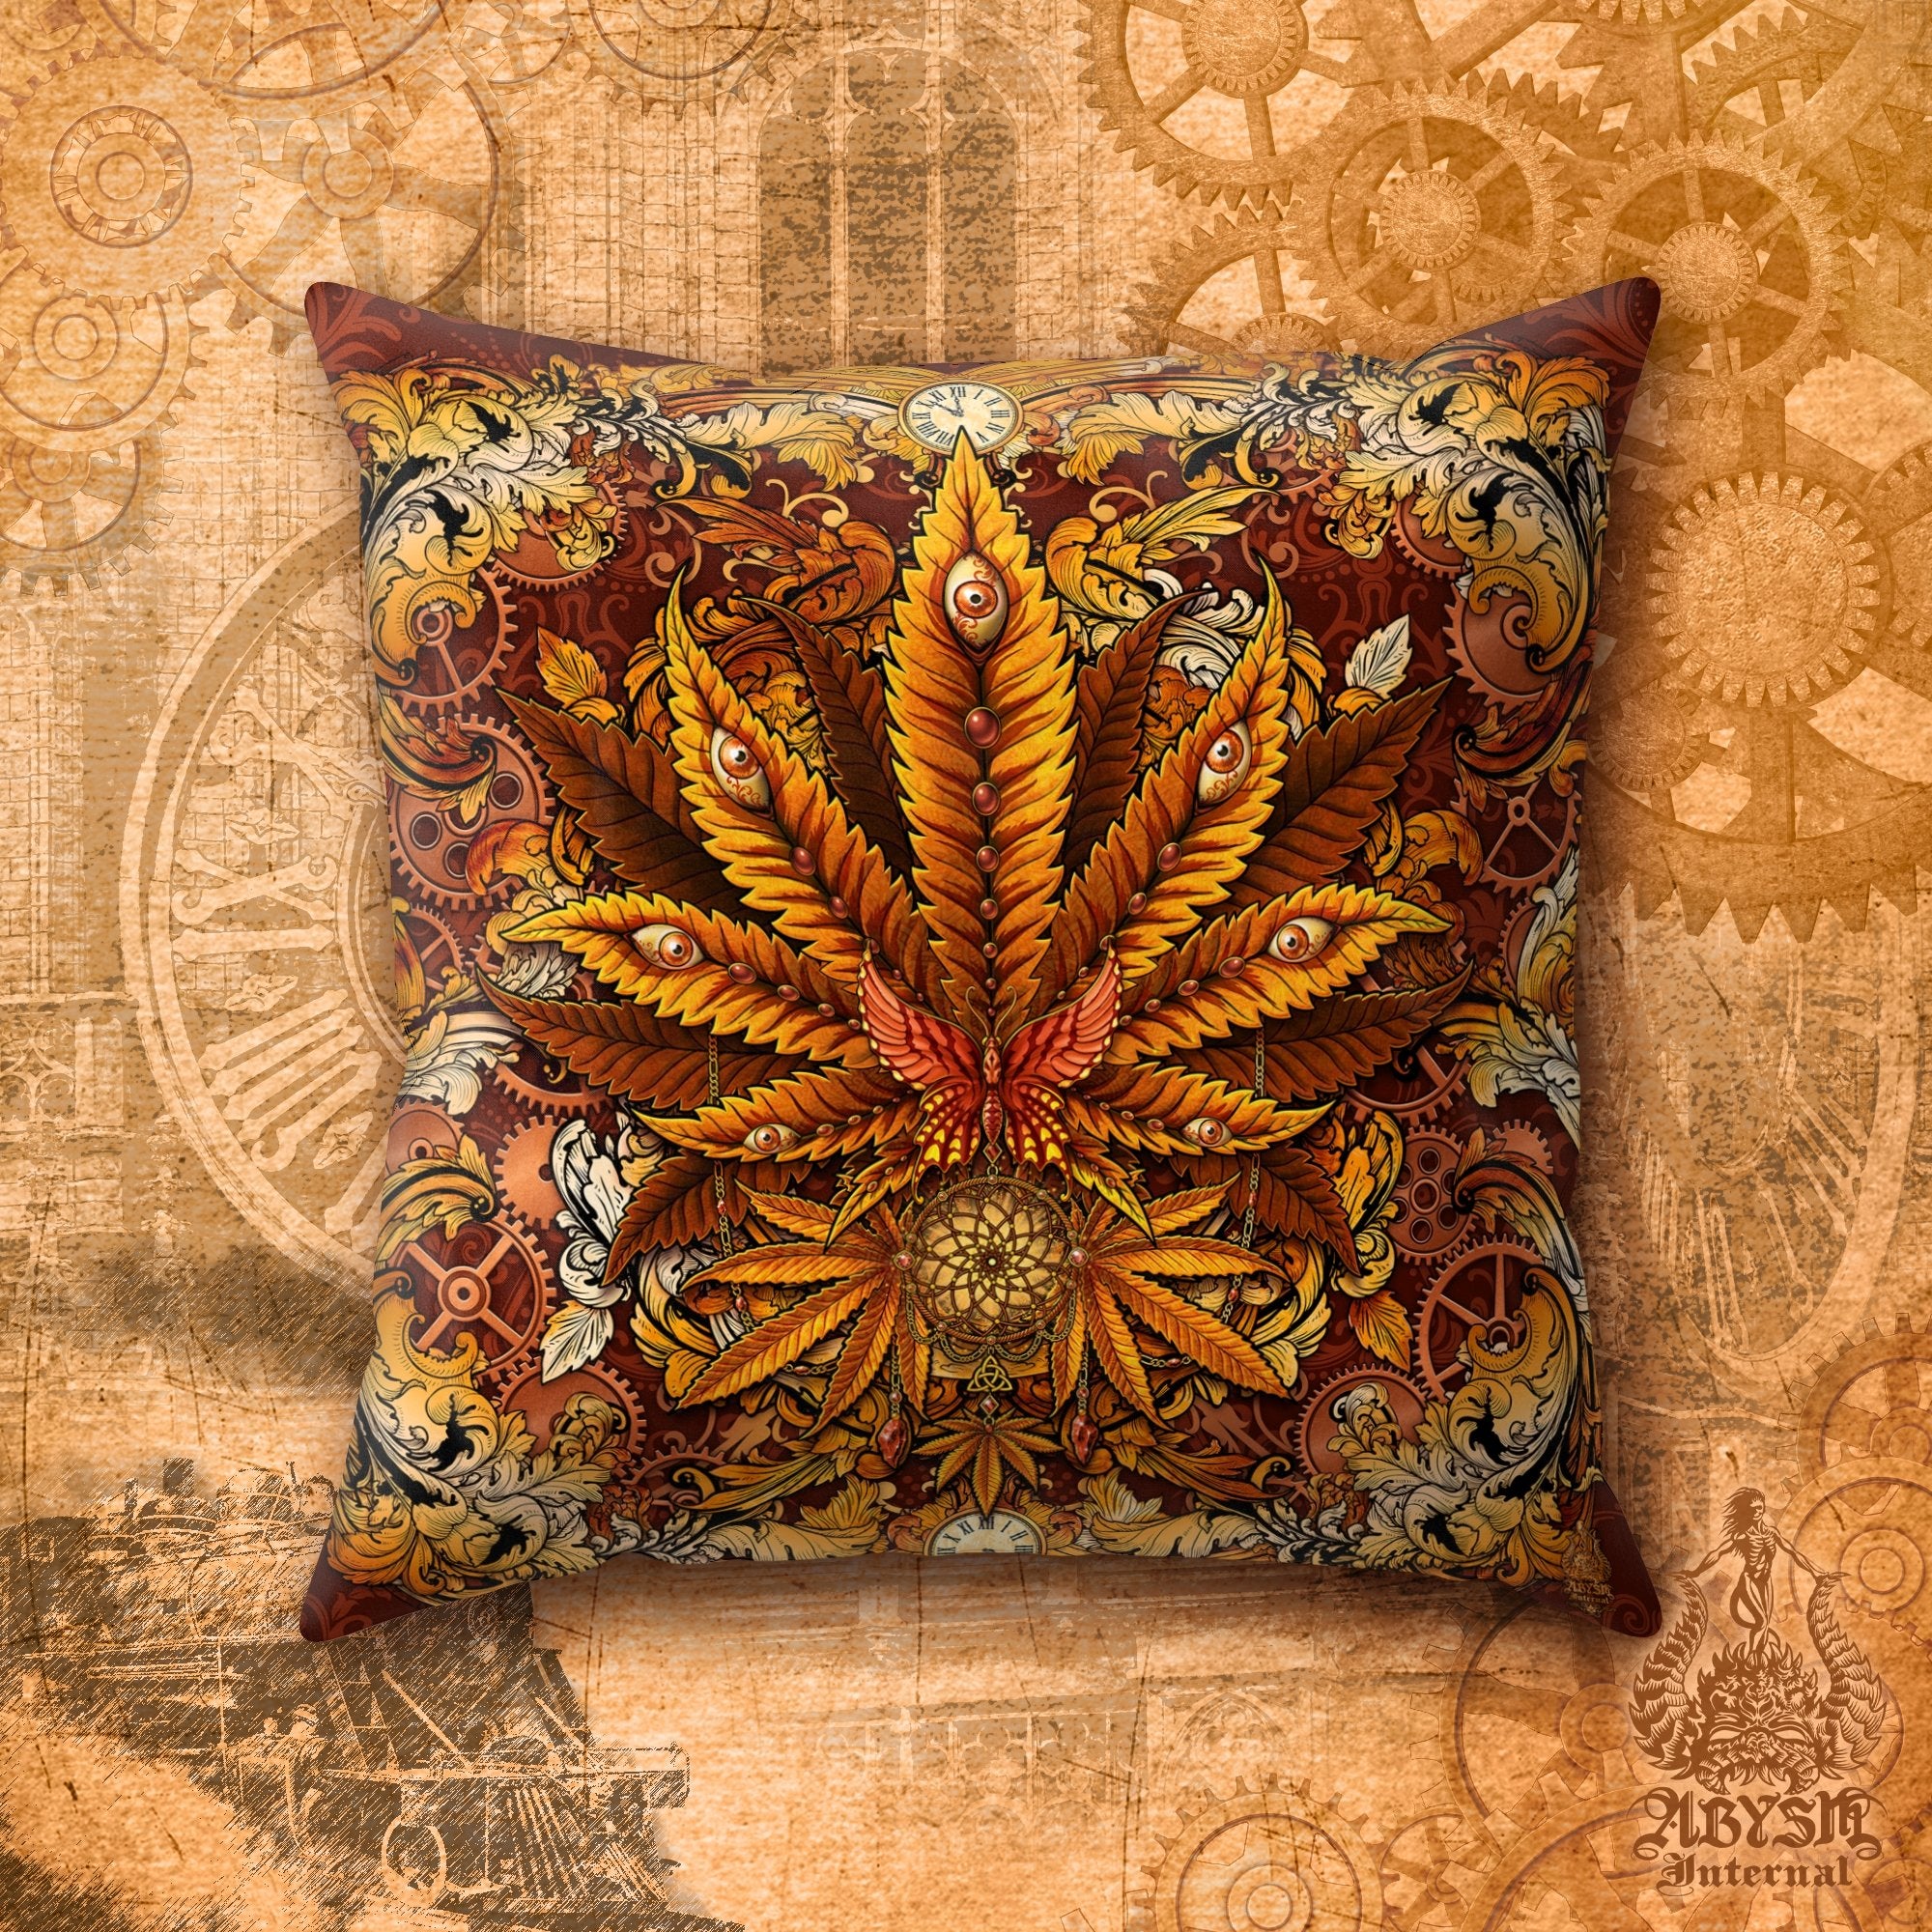 Weed Throw Pillow, Cannabis Shop Decor, Indie Decorative Accent Cushion, Hippie Room Decor, 420 Art Print - Steampunk - Abysm Internal